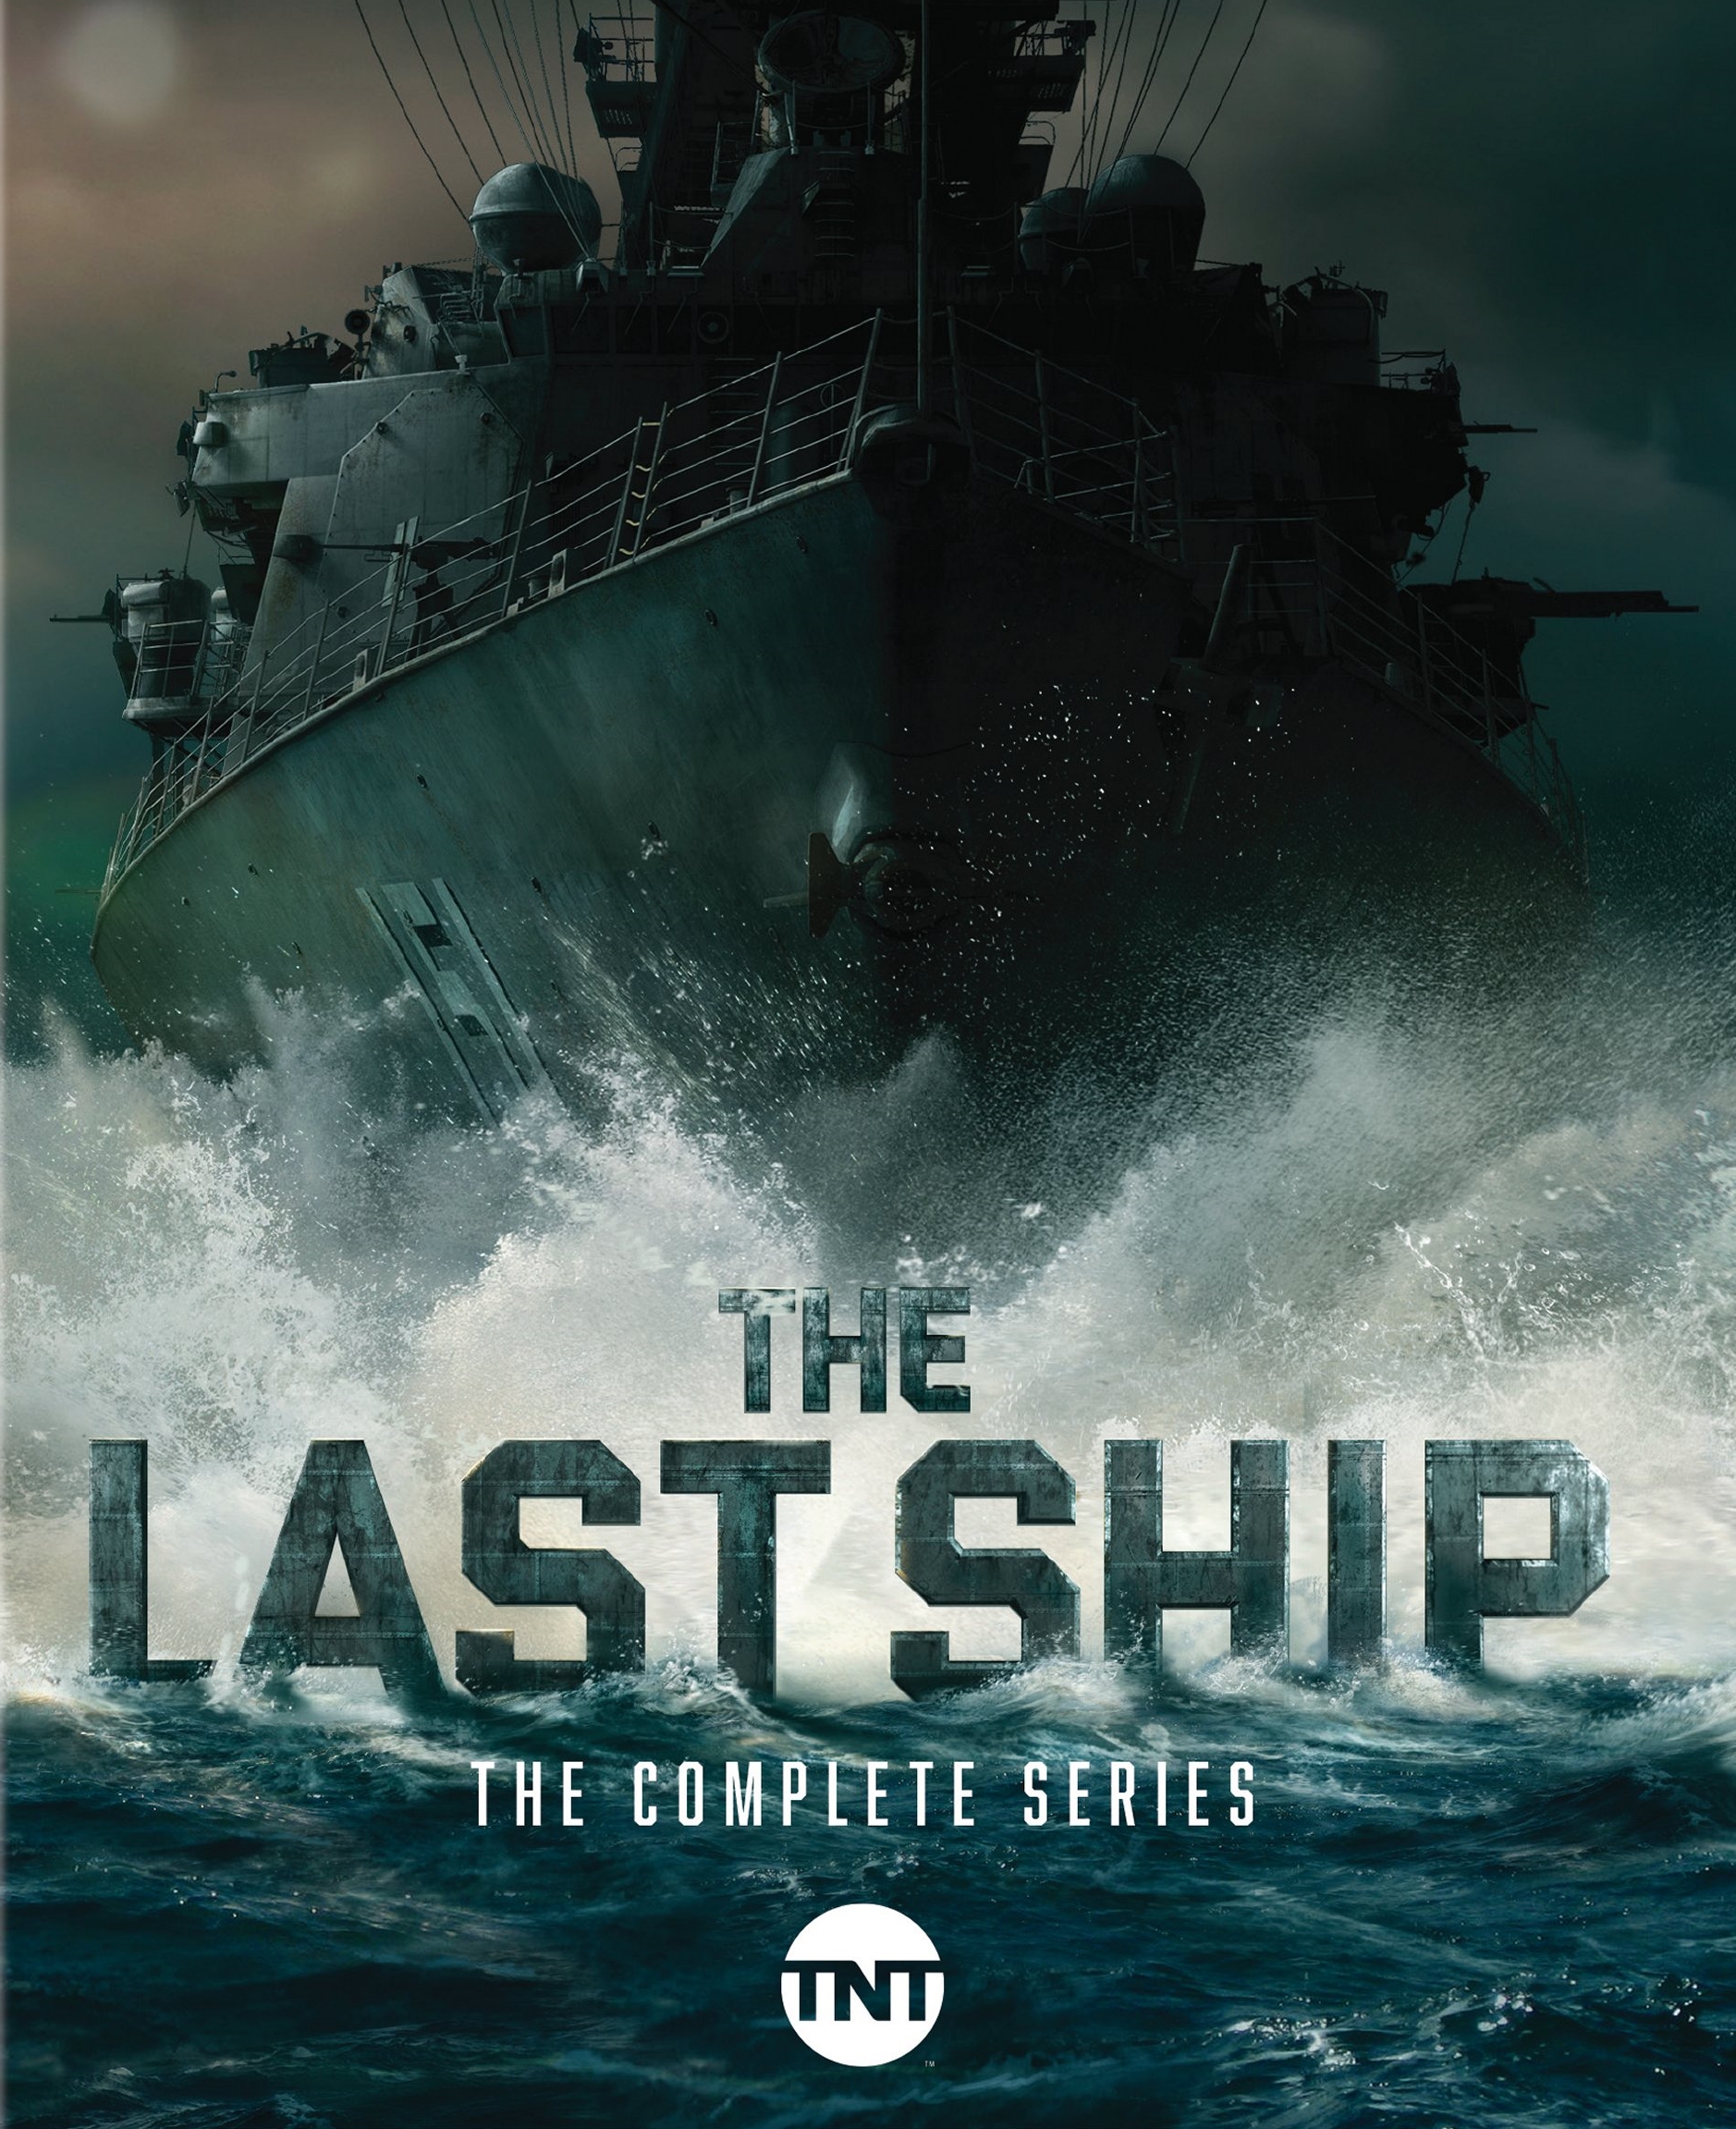 The last ship